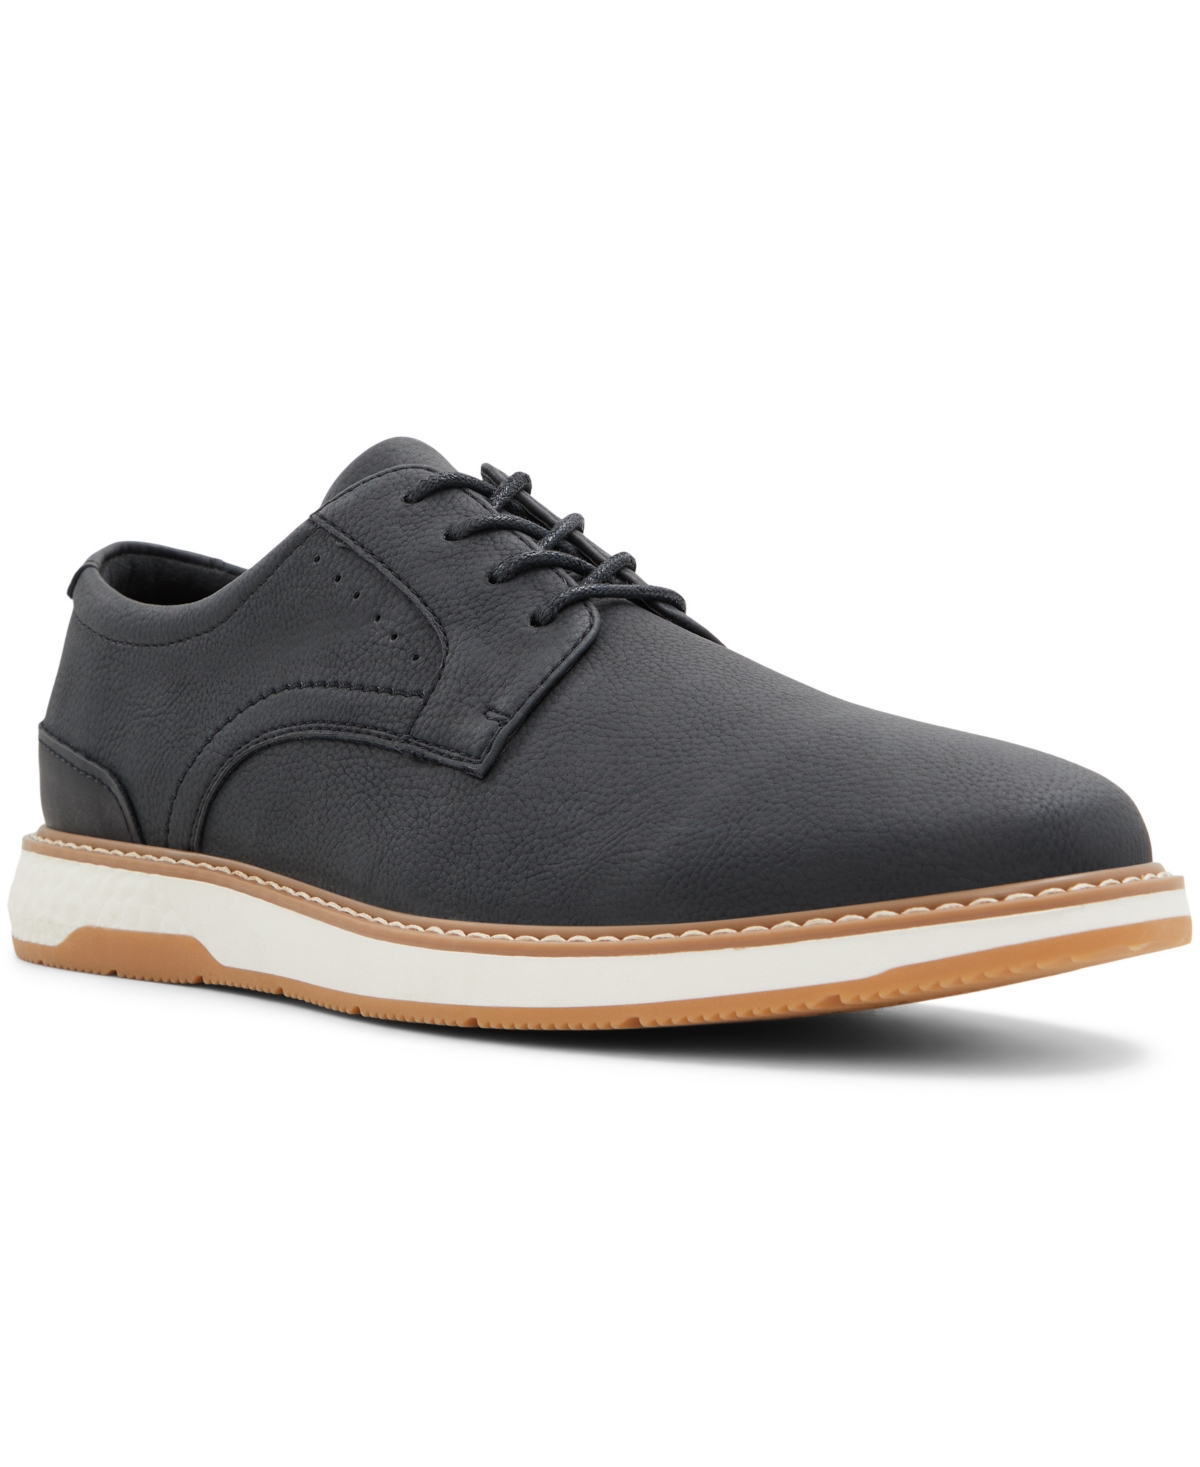 Men's Romerro Casual Derby Shoes - Black